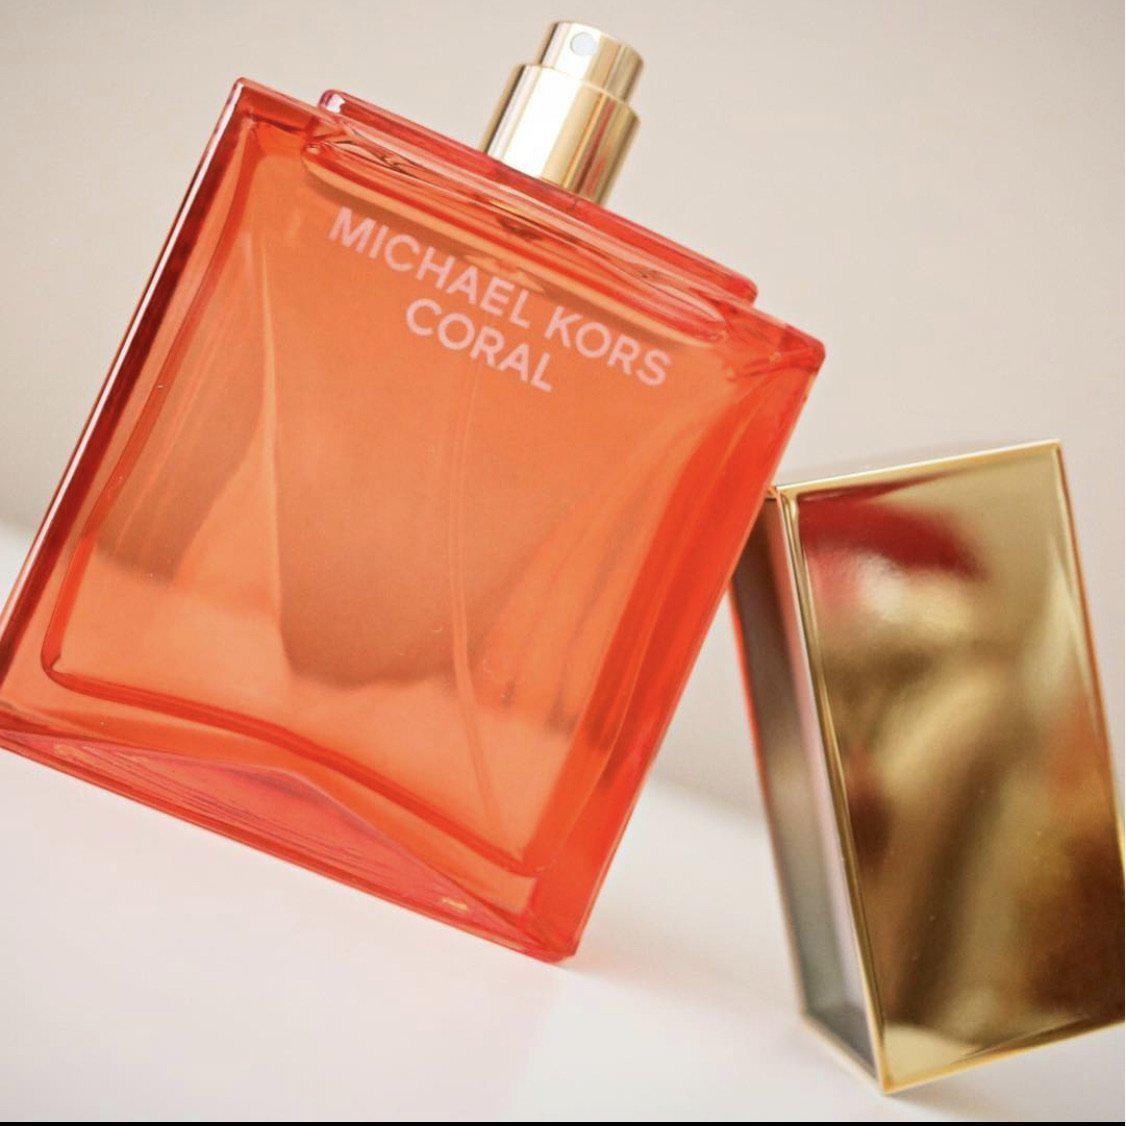 michael kors coral perfume review